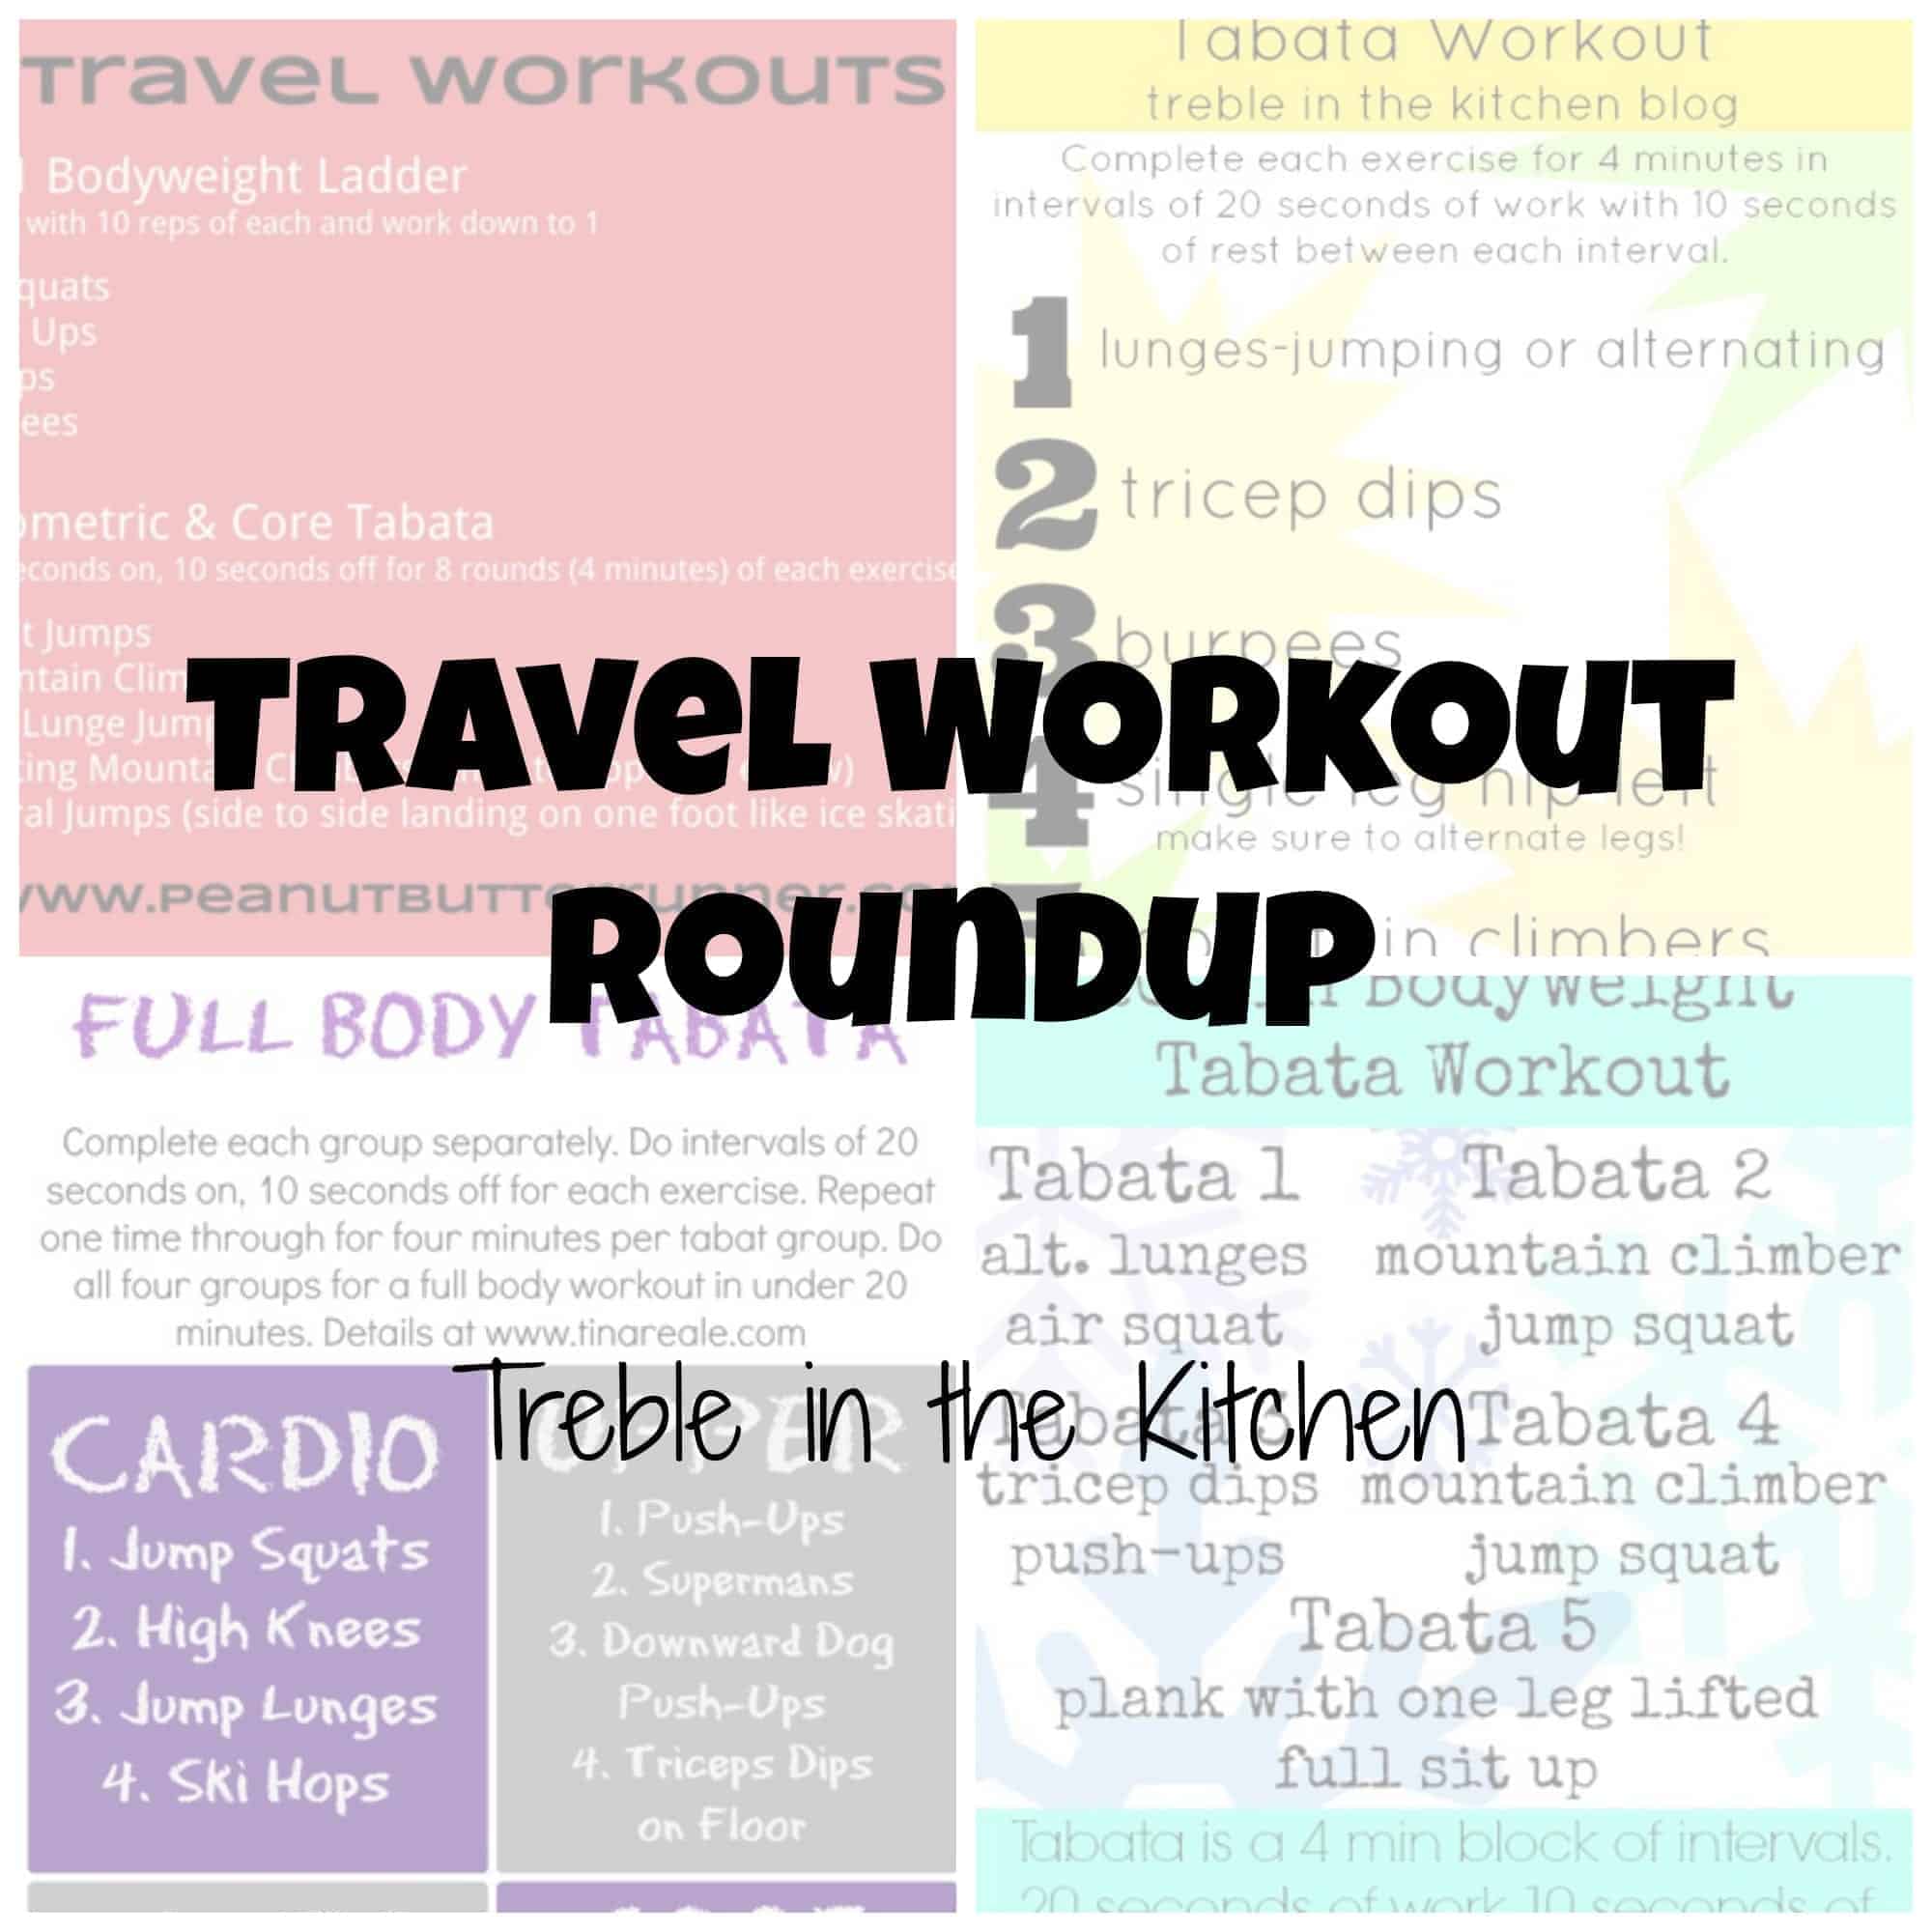 Travel Workout Roundup via Treble in the Kitchen